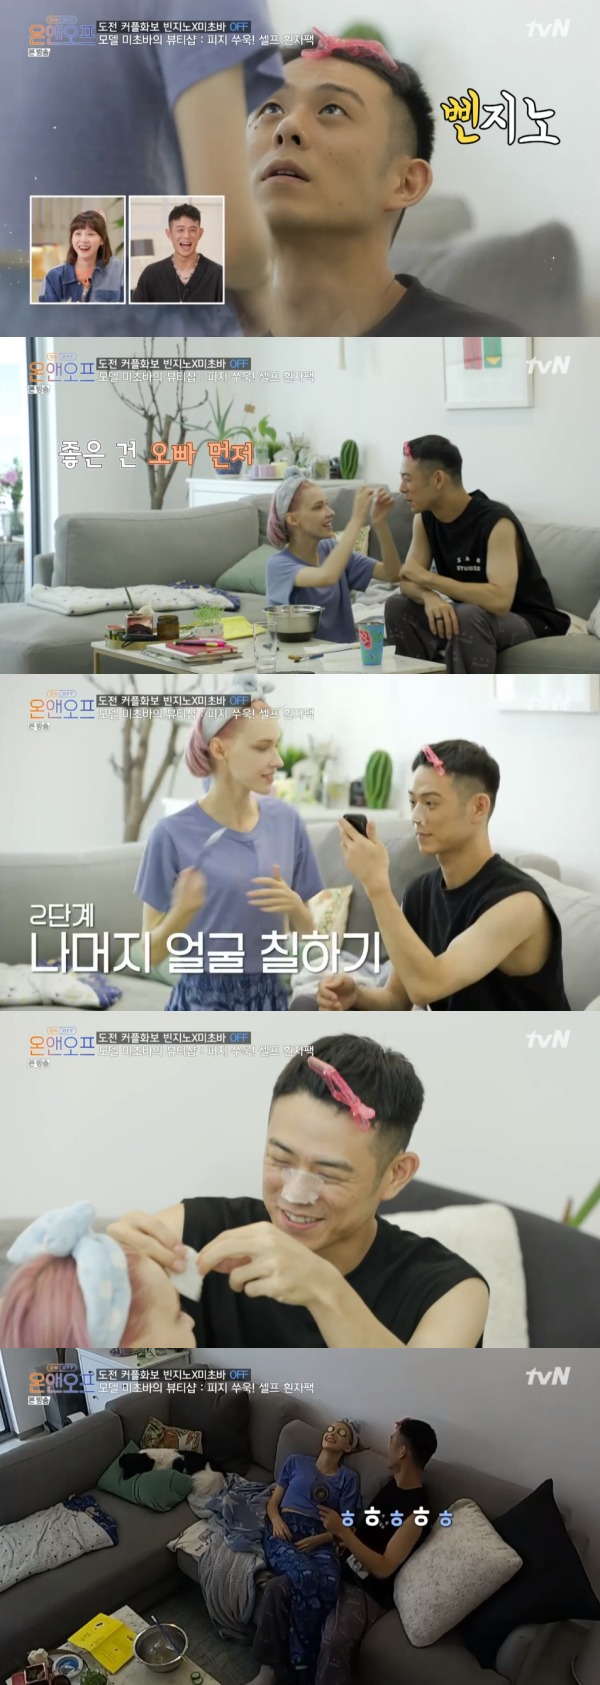 tvN '온앤오프' 방송 화면 캡처 © 뉴스1